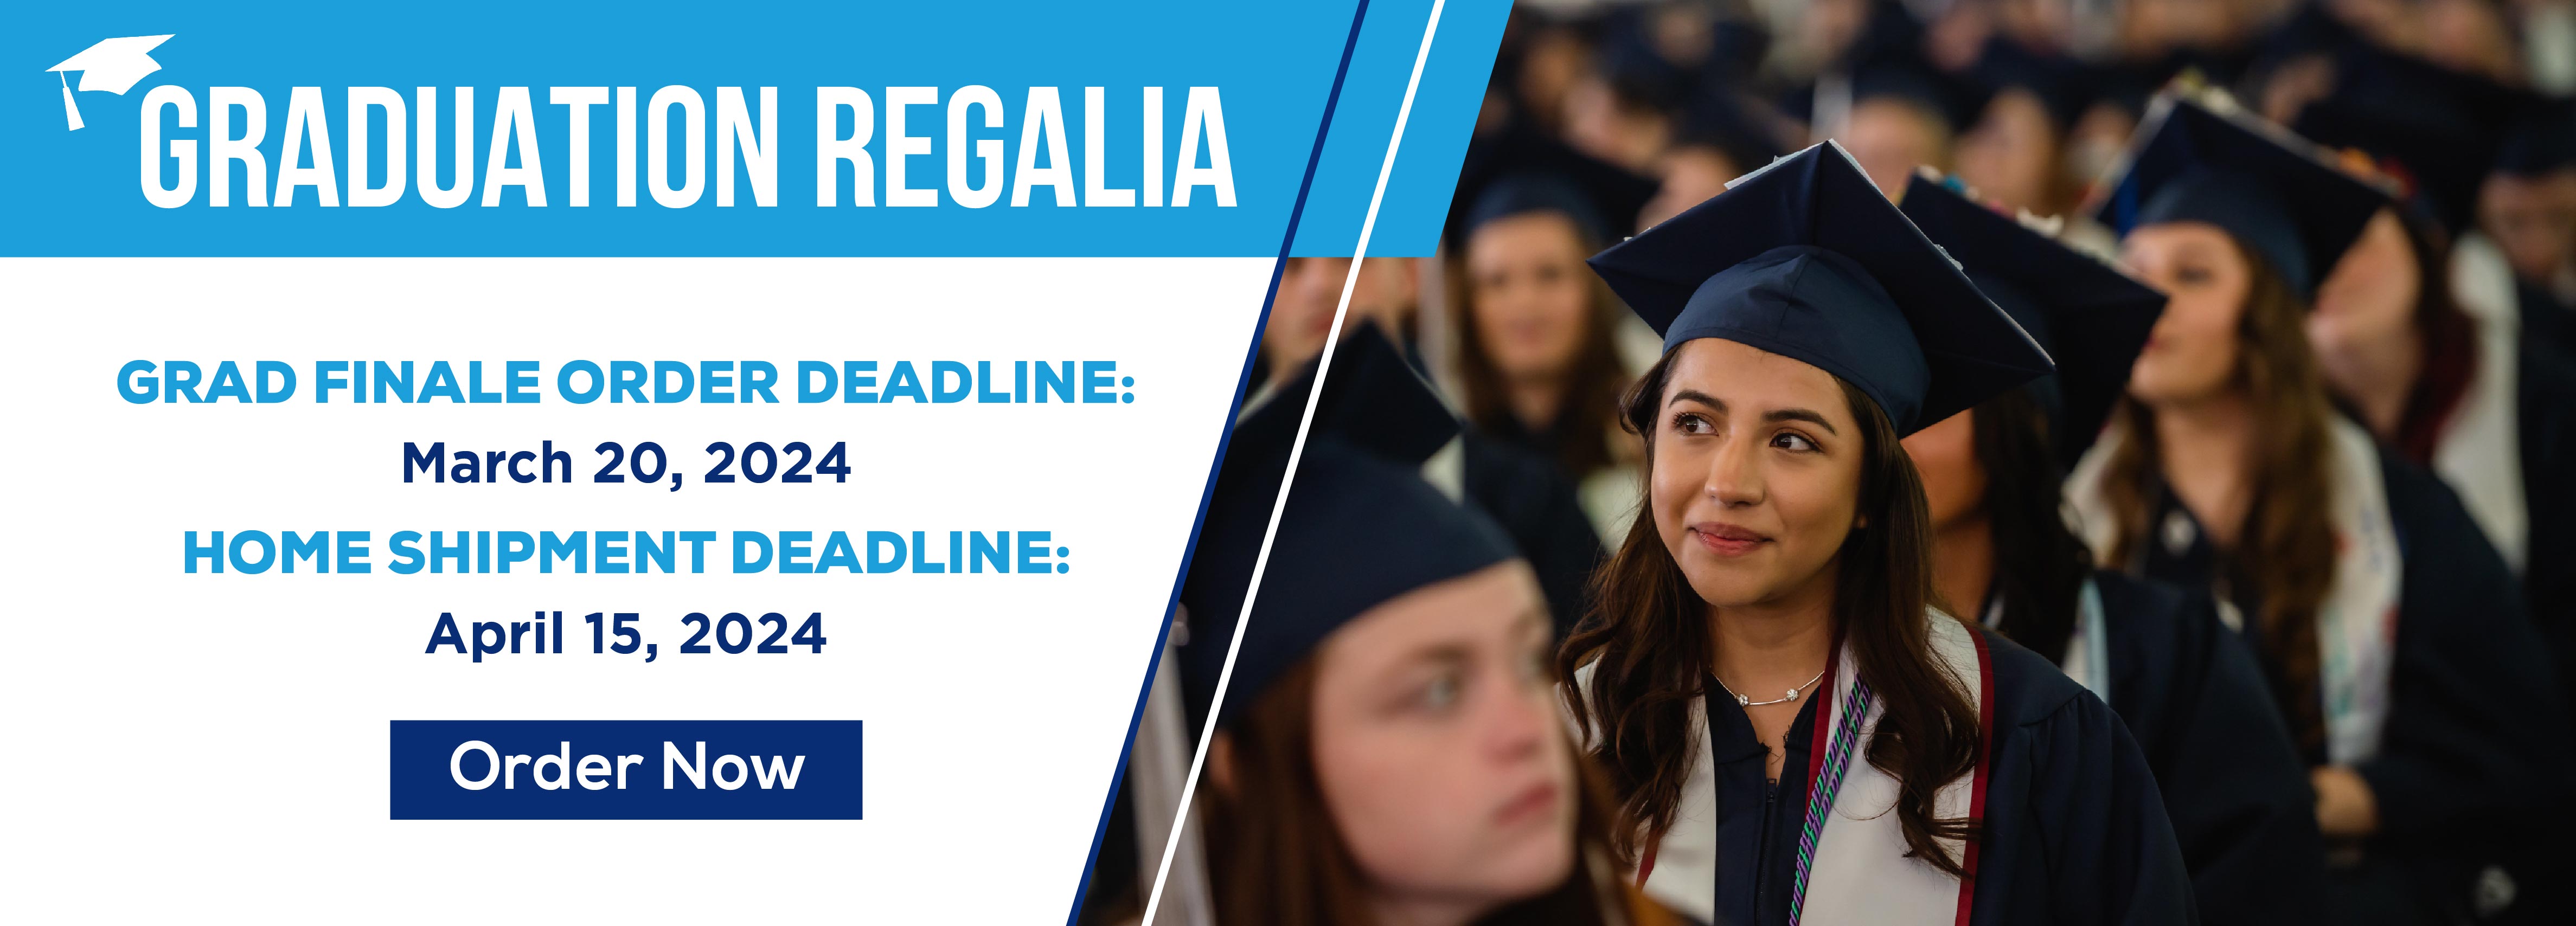 Graduation Regalia Grad Finale Order Deadline: March 20, 2024 Home Shipment Deadline: April 15, 2024 Order Now (new tab)